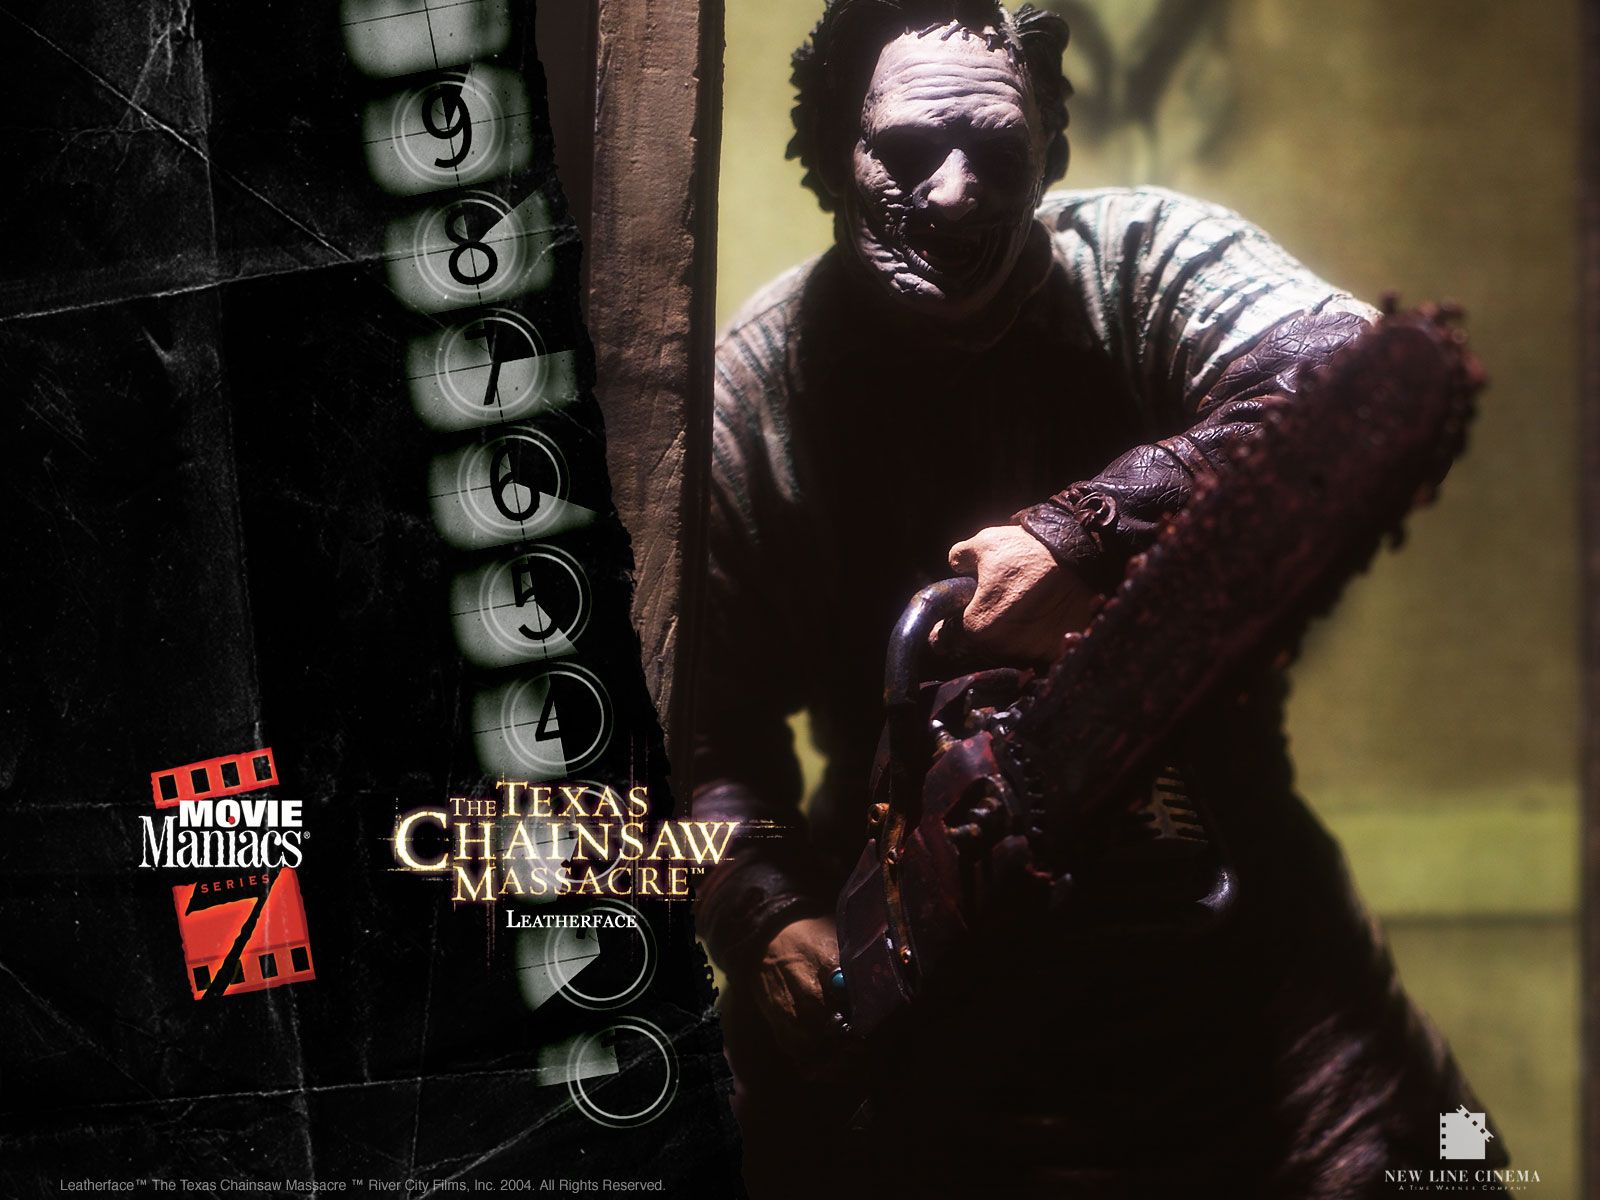 FiguresWorld > Movies & T.V. > The Texas Chainsaw Massacre